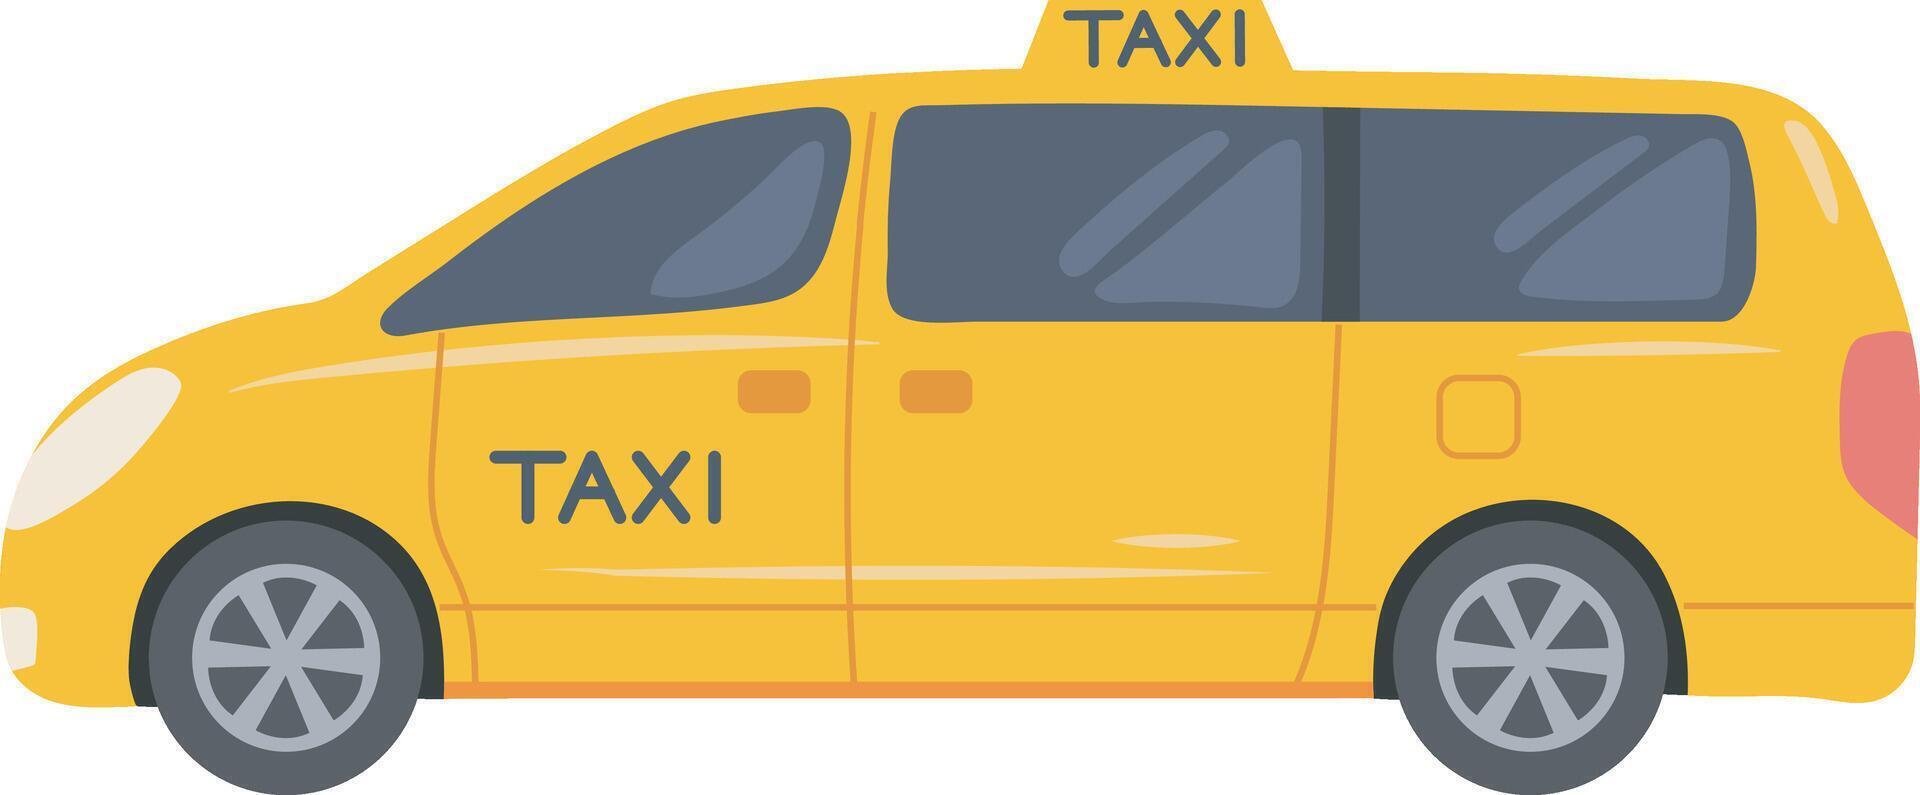 gul taxi cab transport fordon bil service illustration grafisk element konst kort vektor